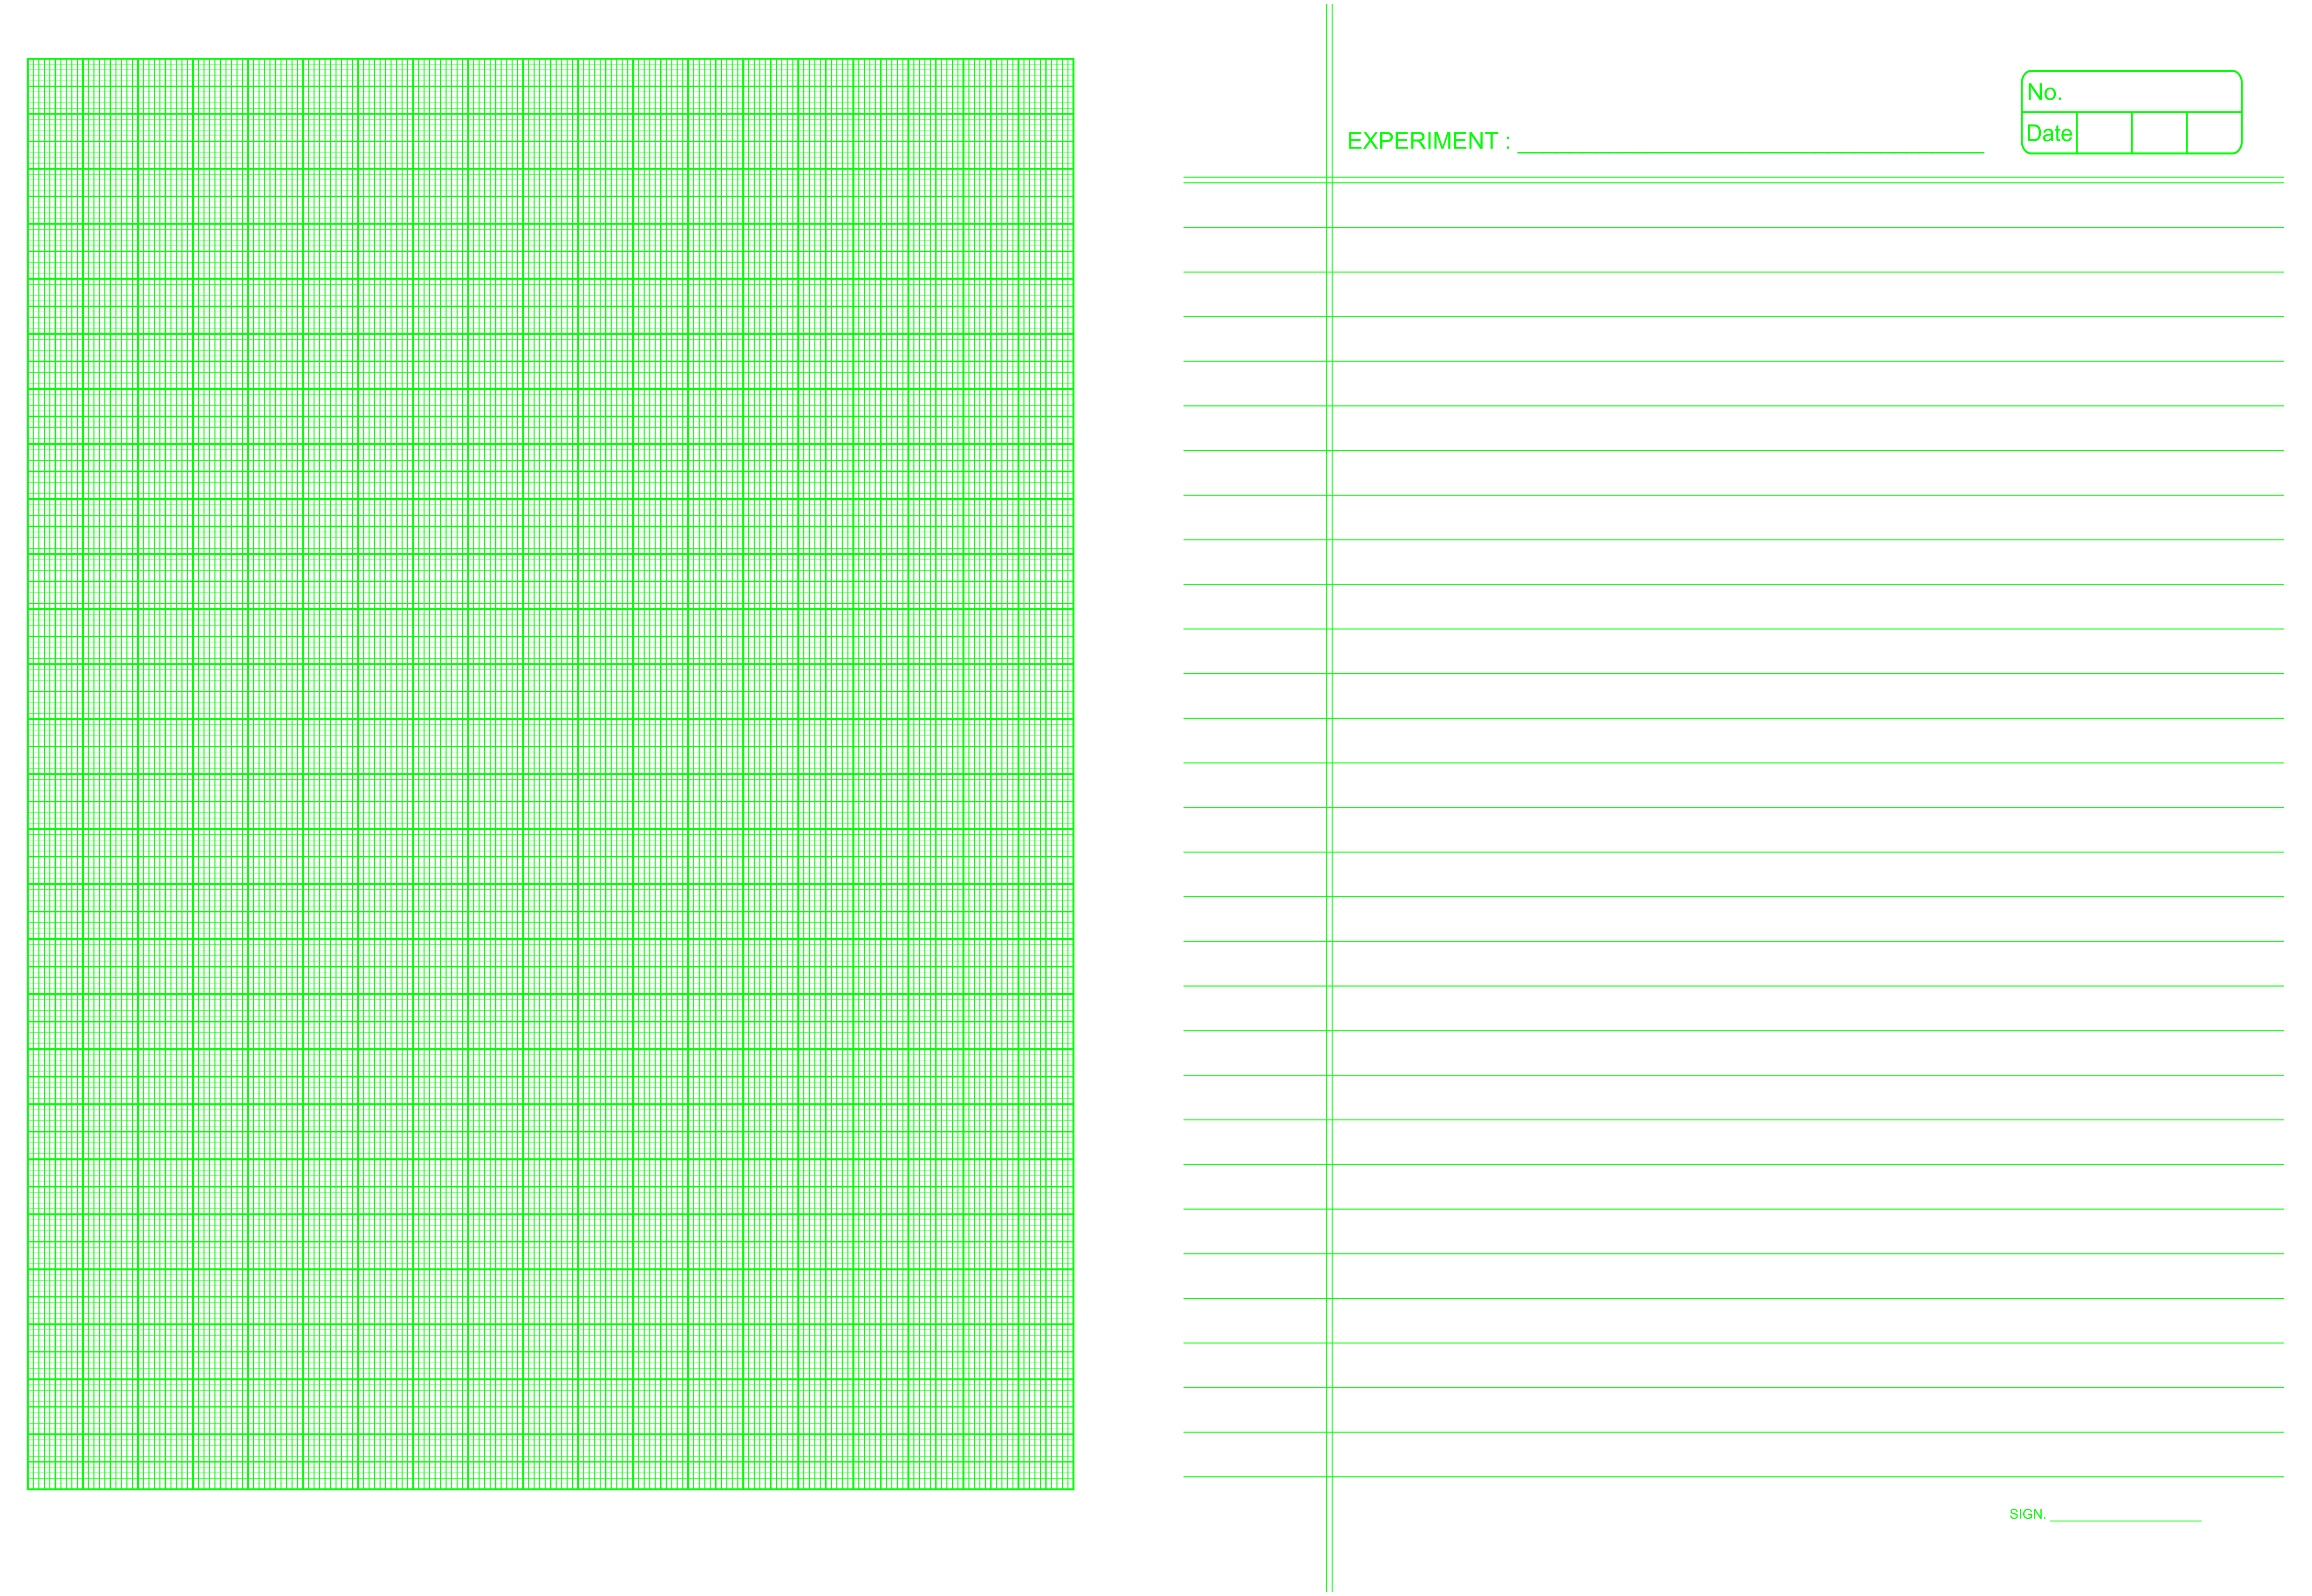 Sundaram Laboratory Book - Big (Graph) - 170 Pages (P-4G) Wholesale Pack - 72 Units